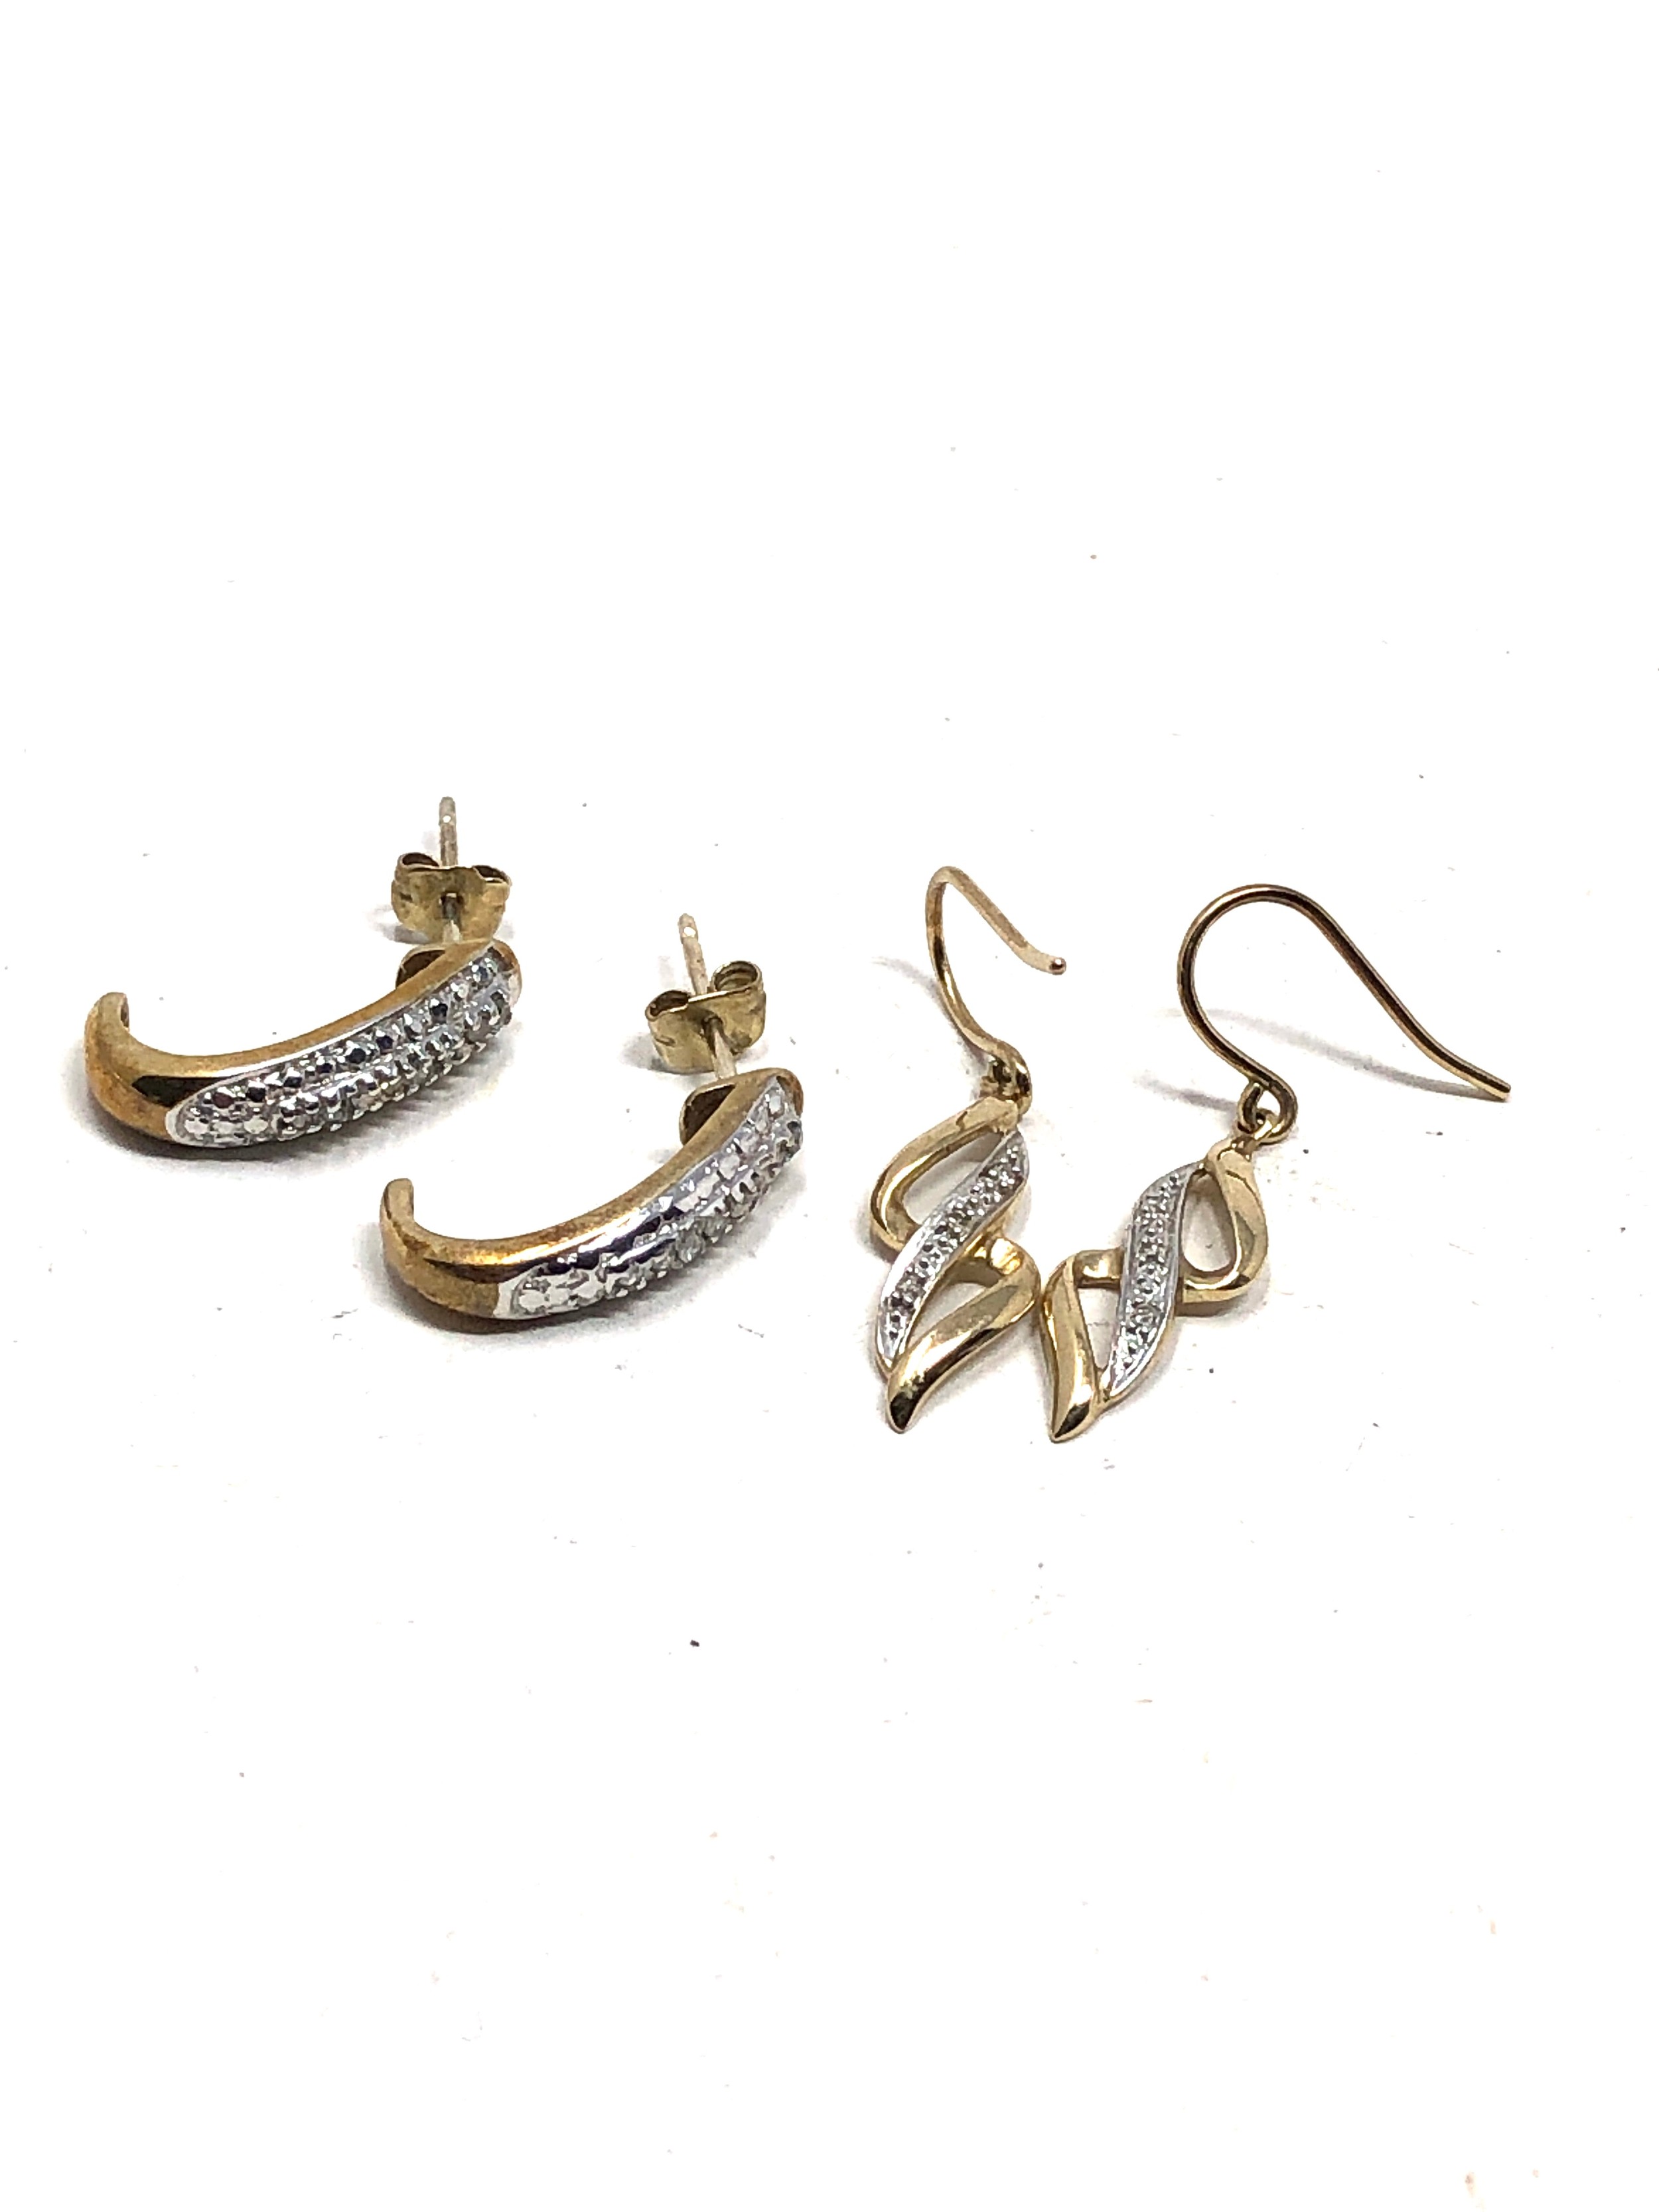 2 x 9ct gold vintage diamond drop earrings (3.2g)